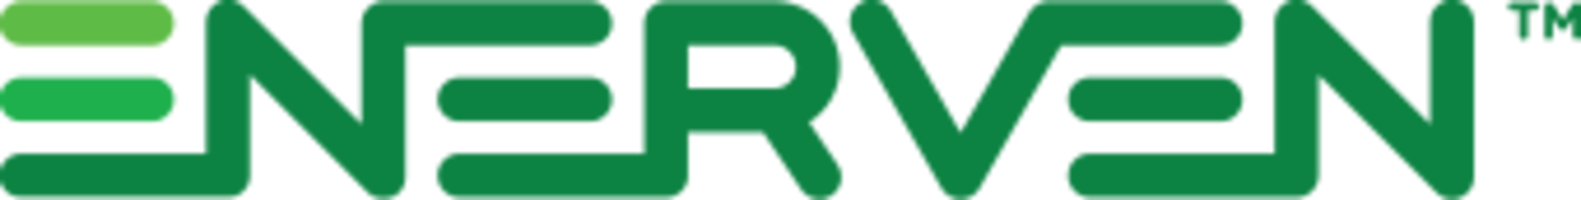 enerven-logo-resized